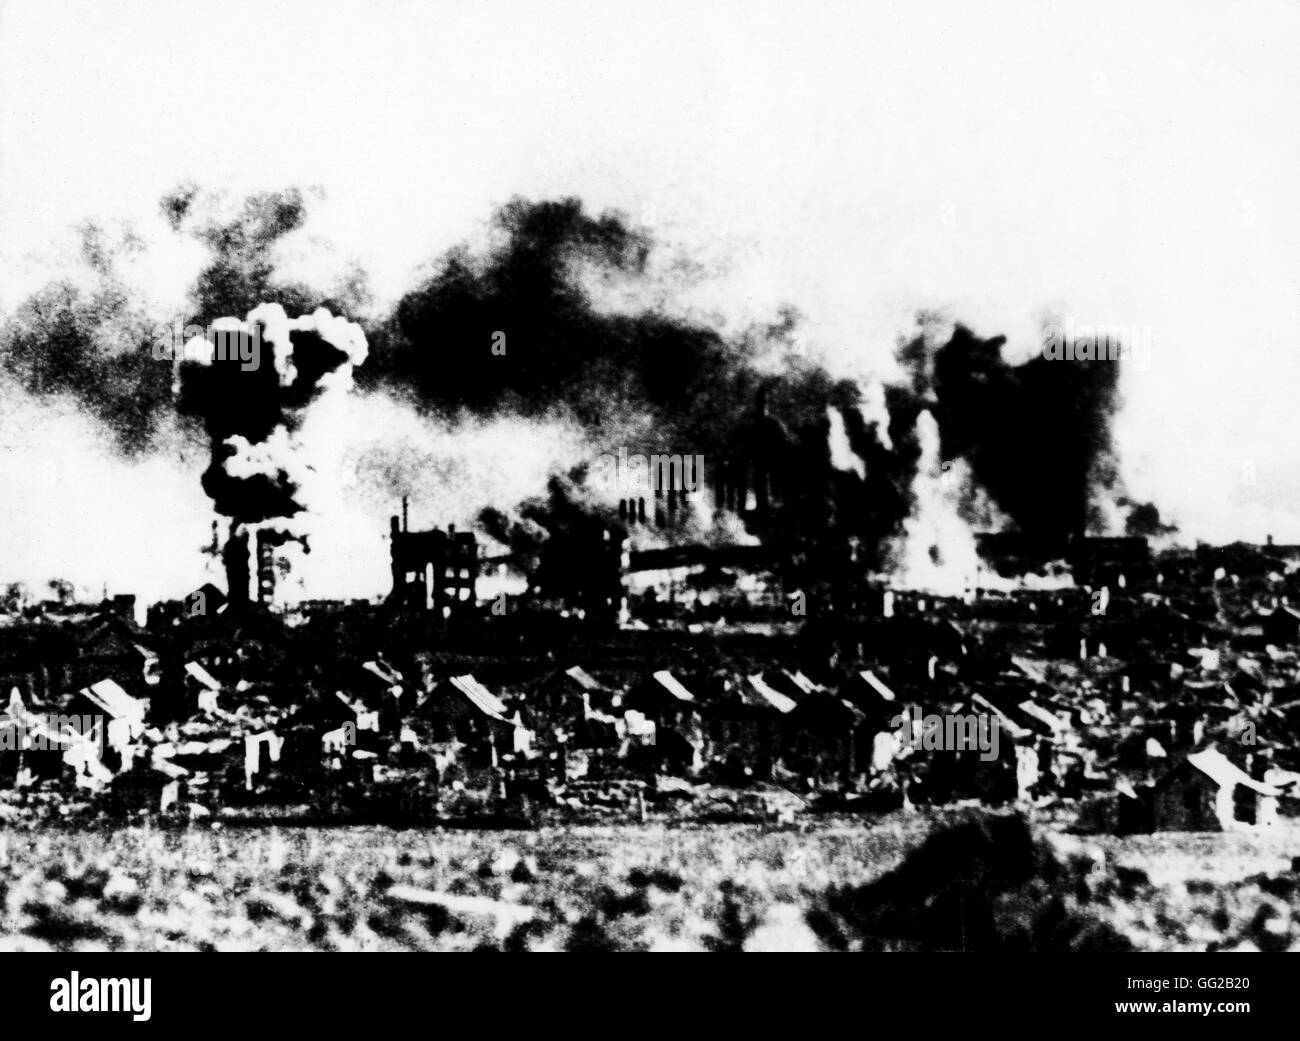 Stalingrad in Brand 17. November 1942 UdSSR, zweiten Weltkrieg Krieg National Archives, Washington Stockfoto